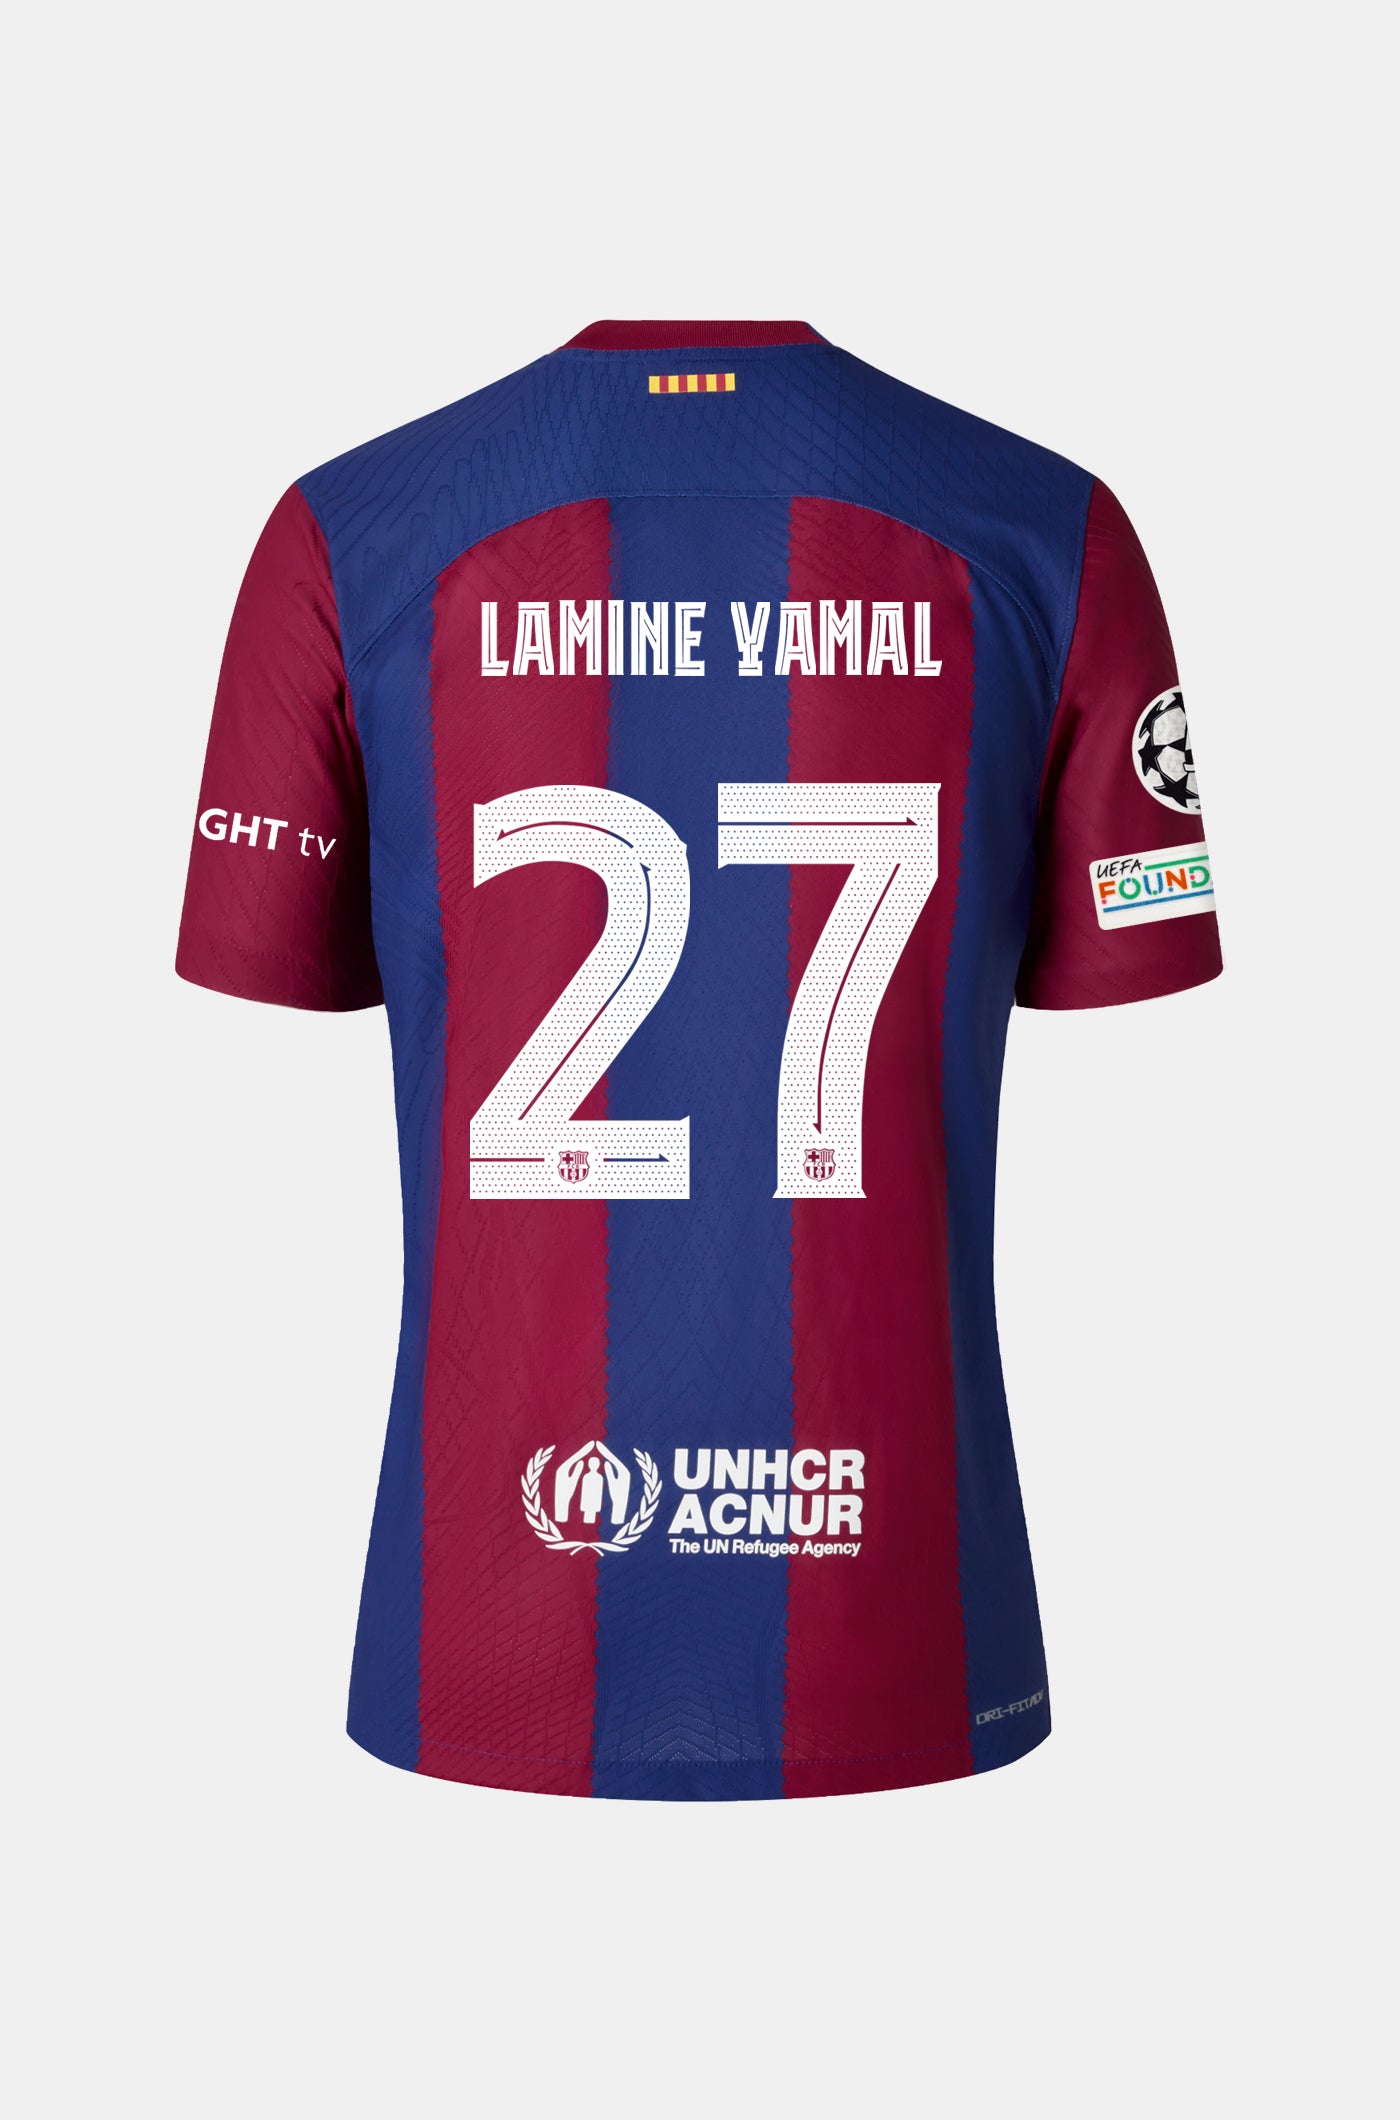 UCL FC Barcelona home shirt 23/24 - Long-sleeve - LAMINE YAMAL